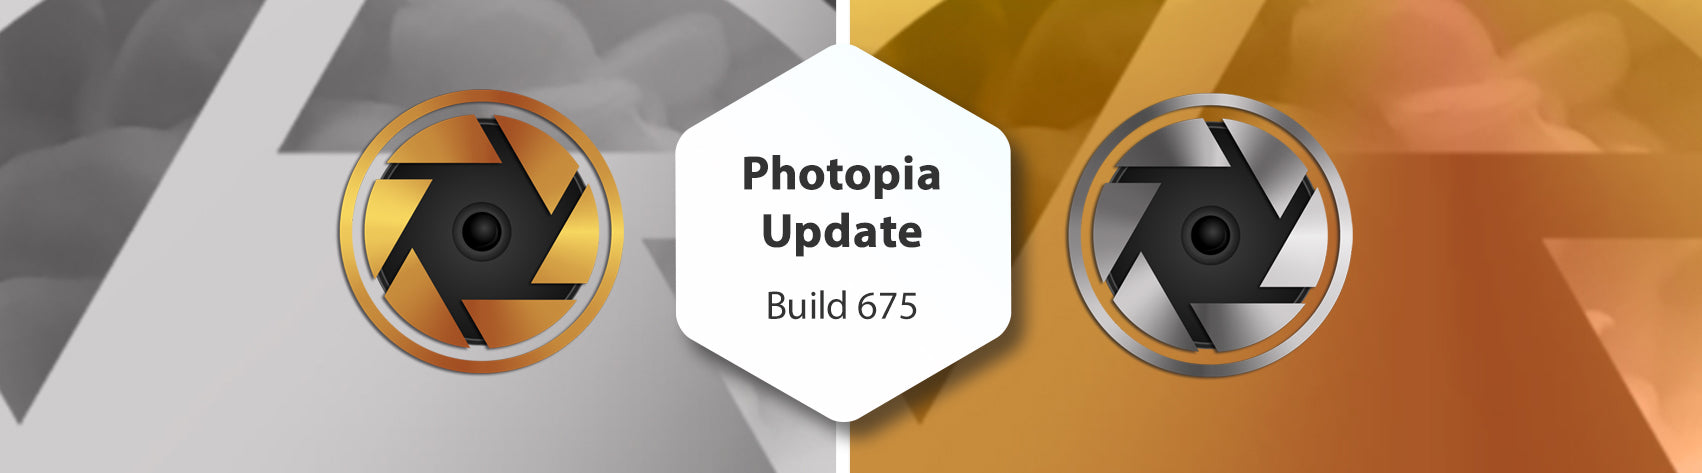 Photopia Update - Build 675